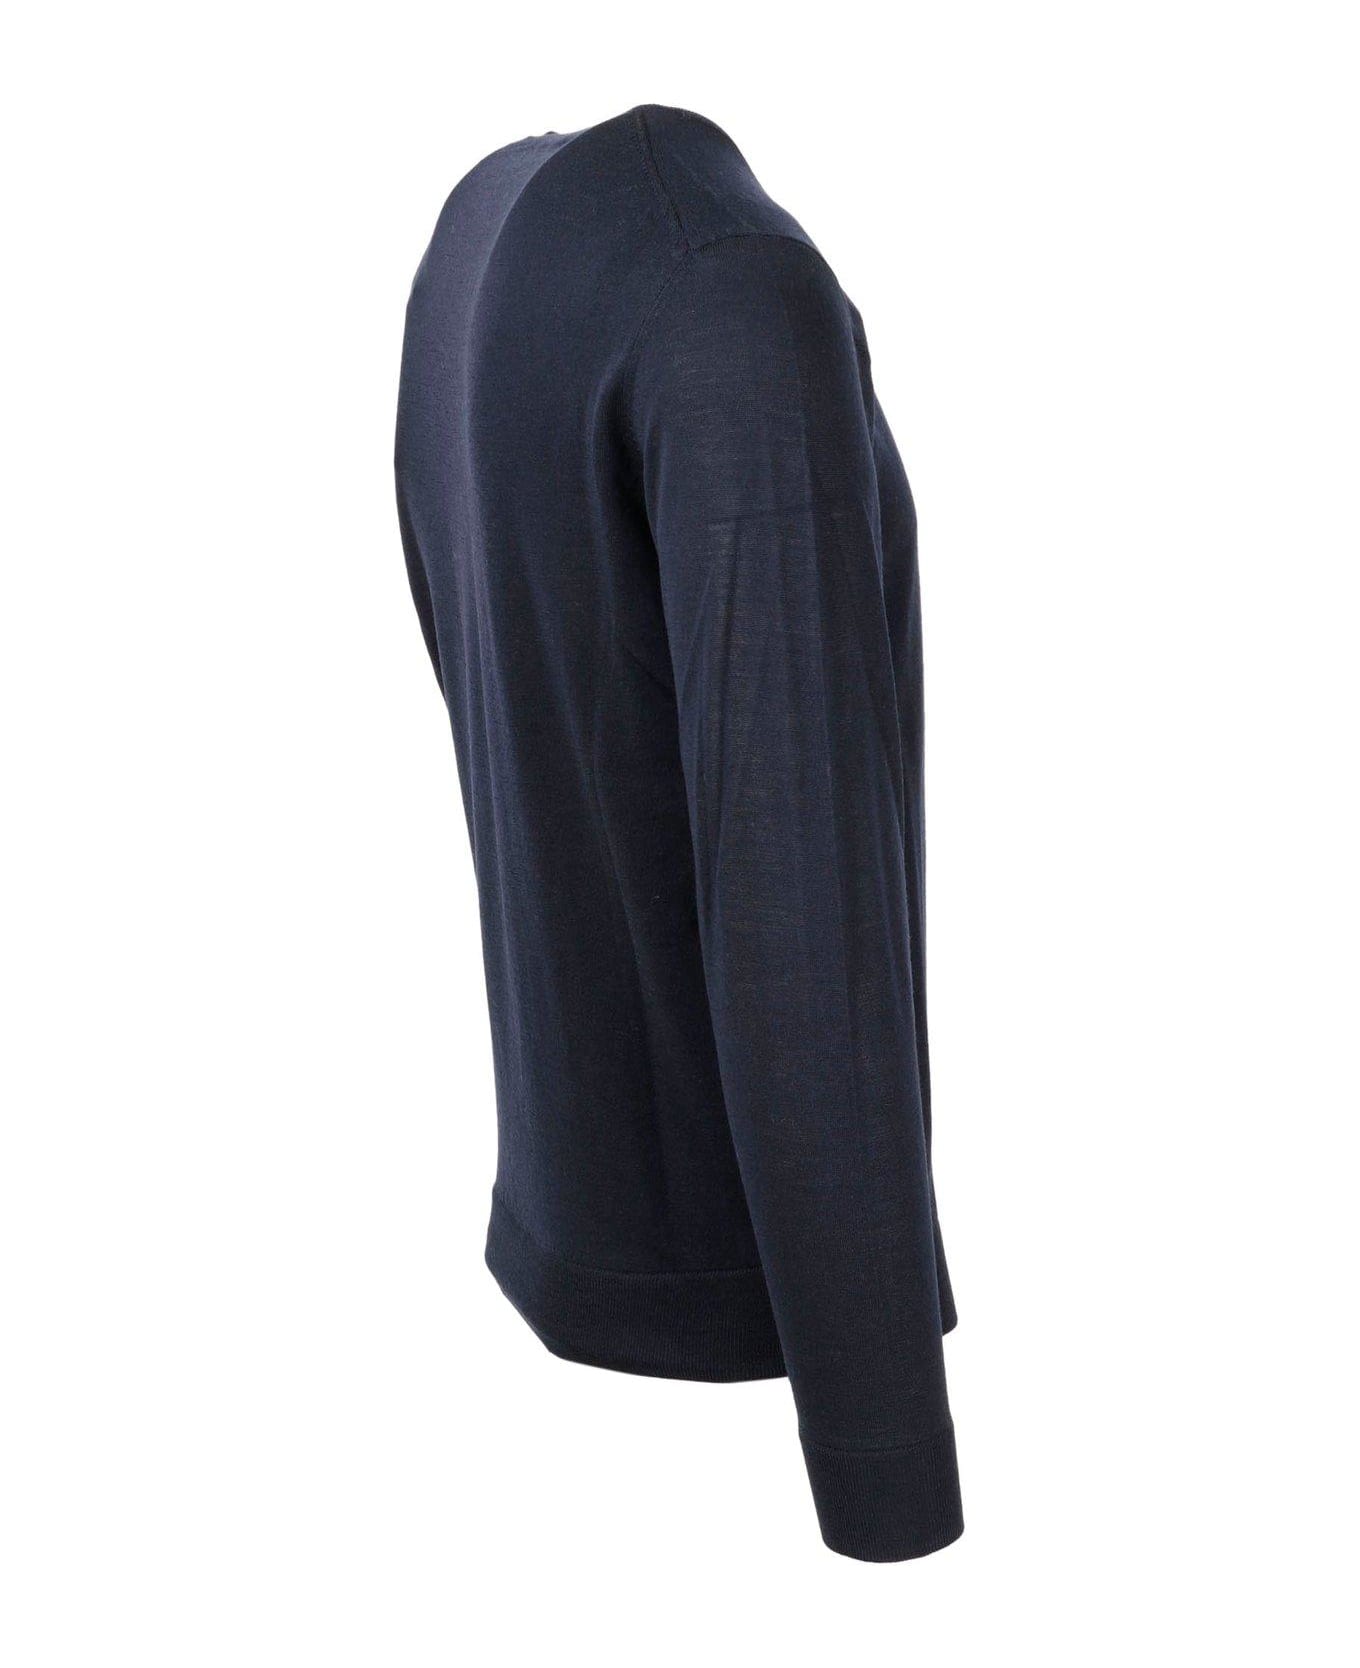 Paolo Pecora Crewneck Long-sleeved Sweater - Blu Royal